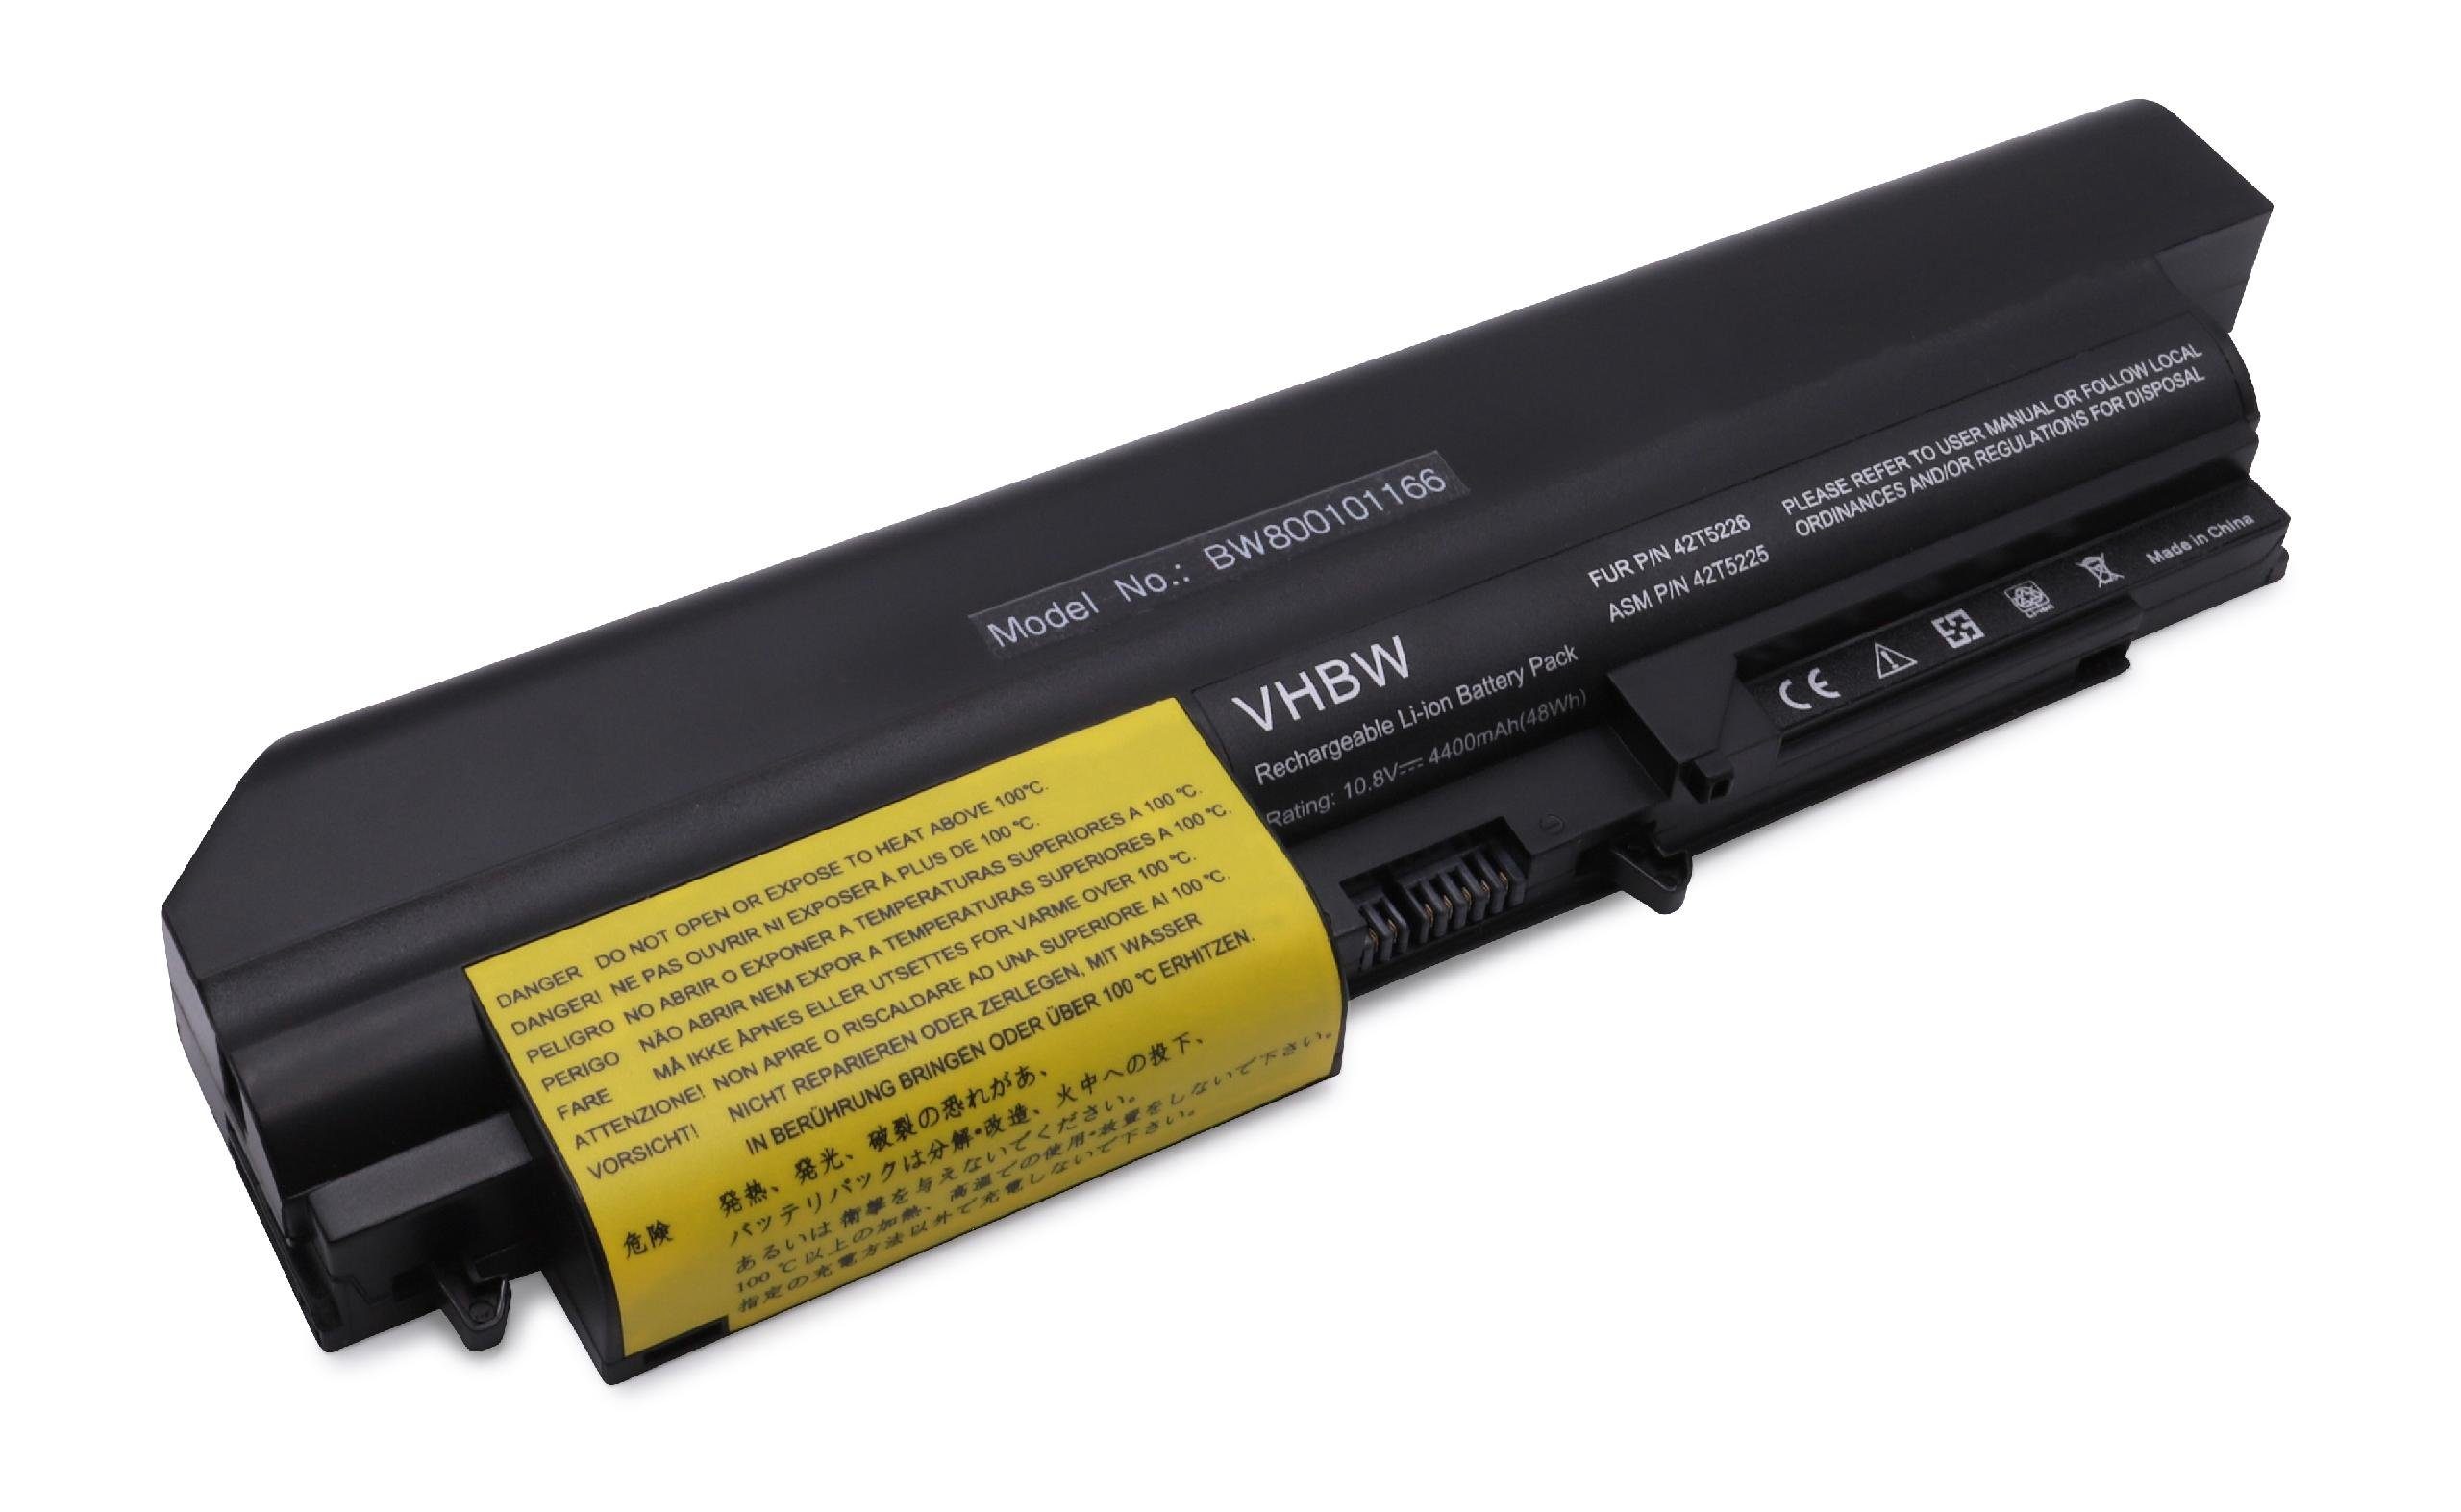 vhbw kompatibel mit IBM Lenovo ThinkPad R400 14.1' Widescreen, T400 14.1' Laptop-Akku Li-Ion 4400 mAh (10,8 V)